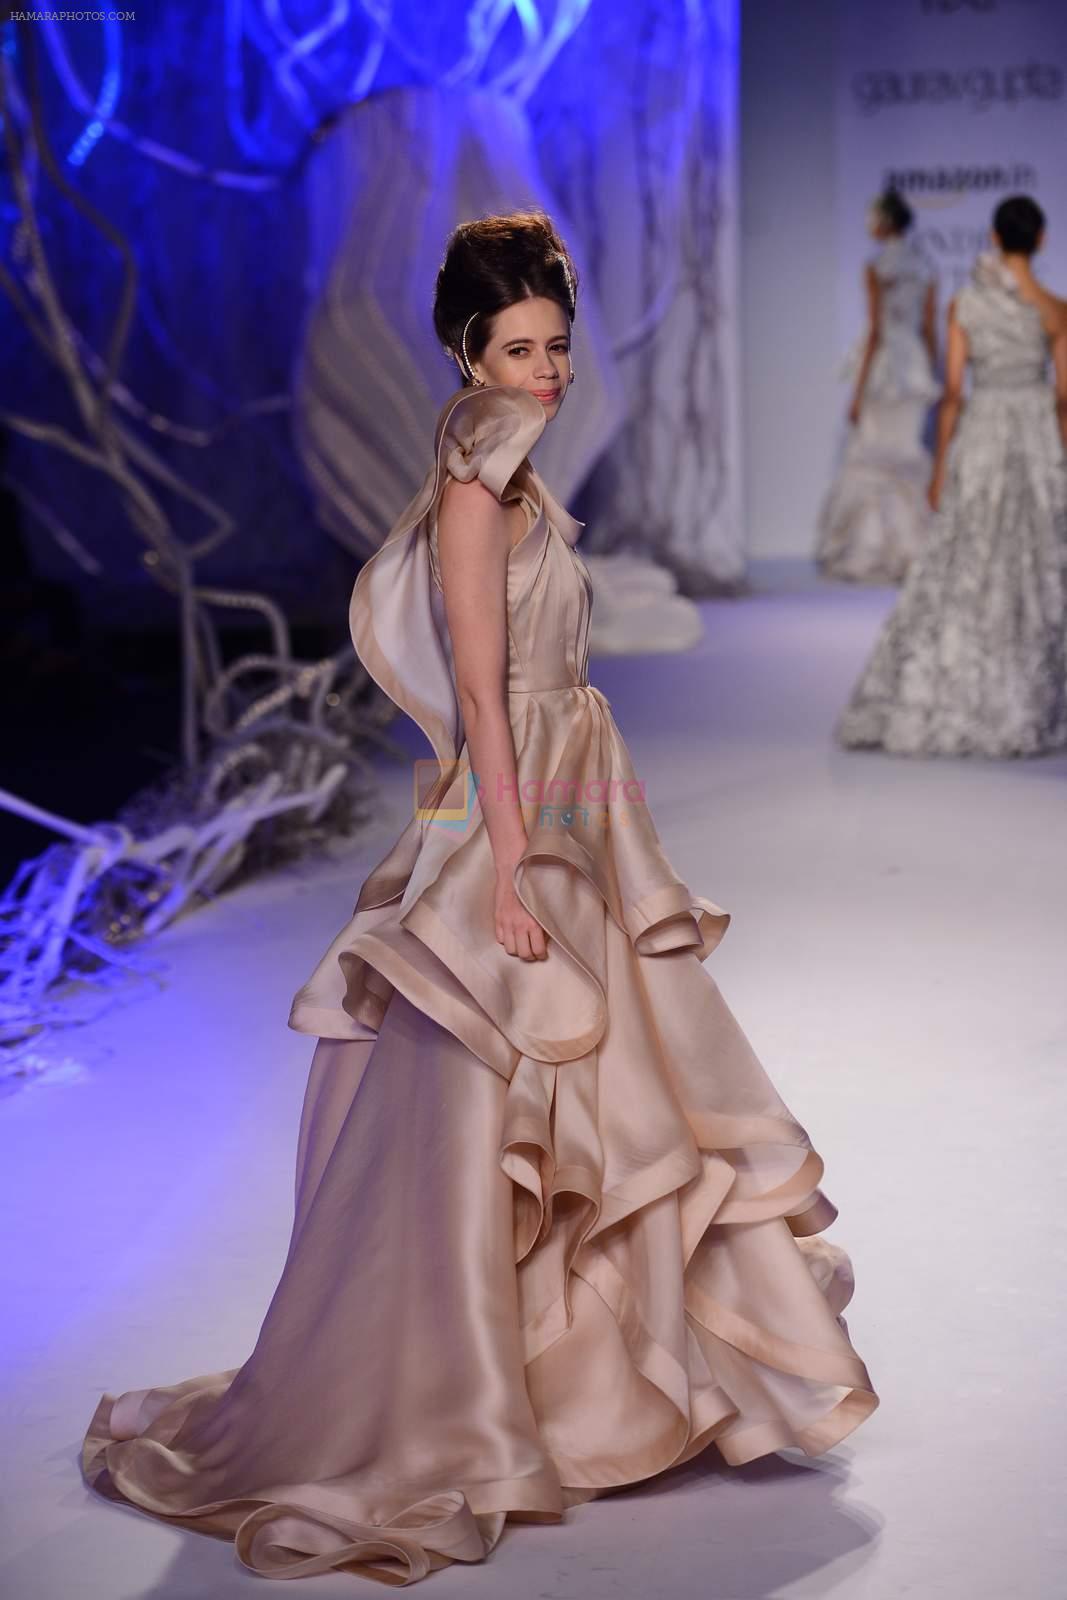 Kalki Koechlin walks for Gaurav Gupta at India Couture week day 2 on 30th July 2015